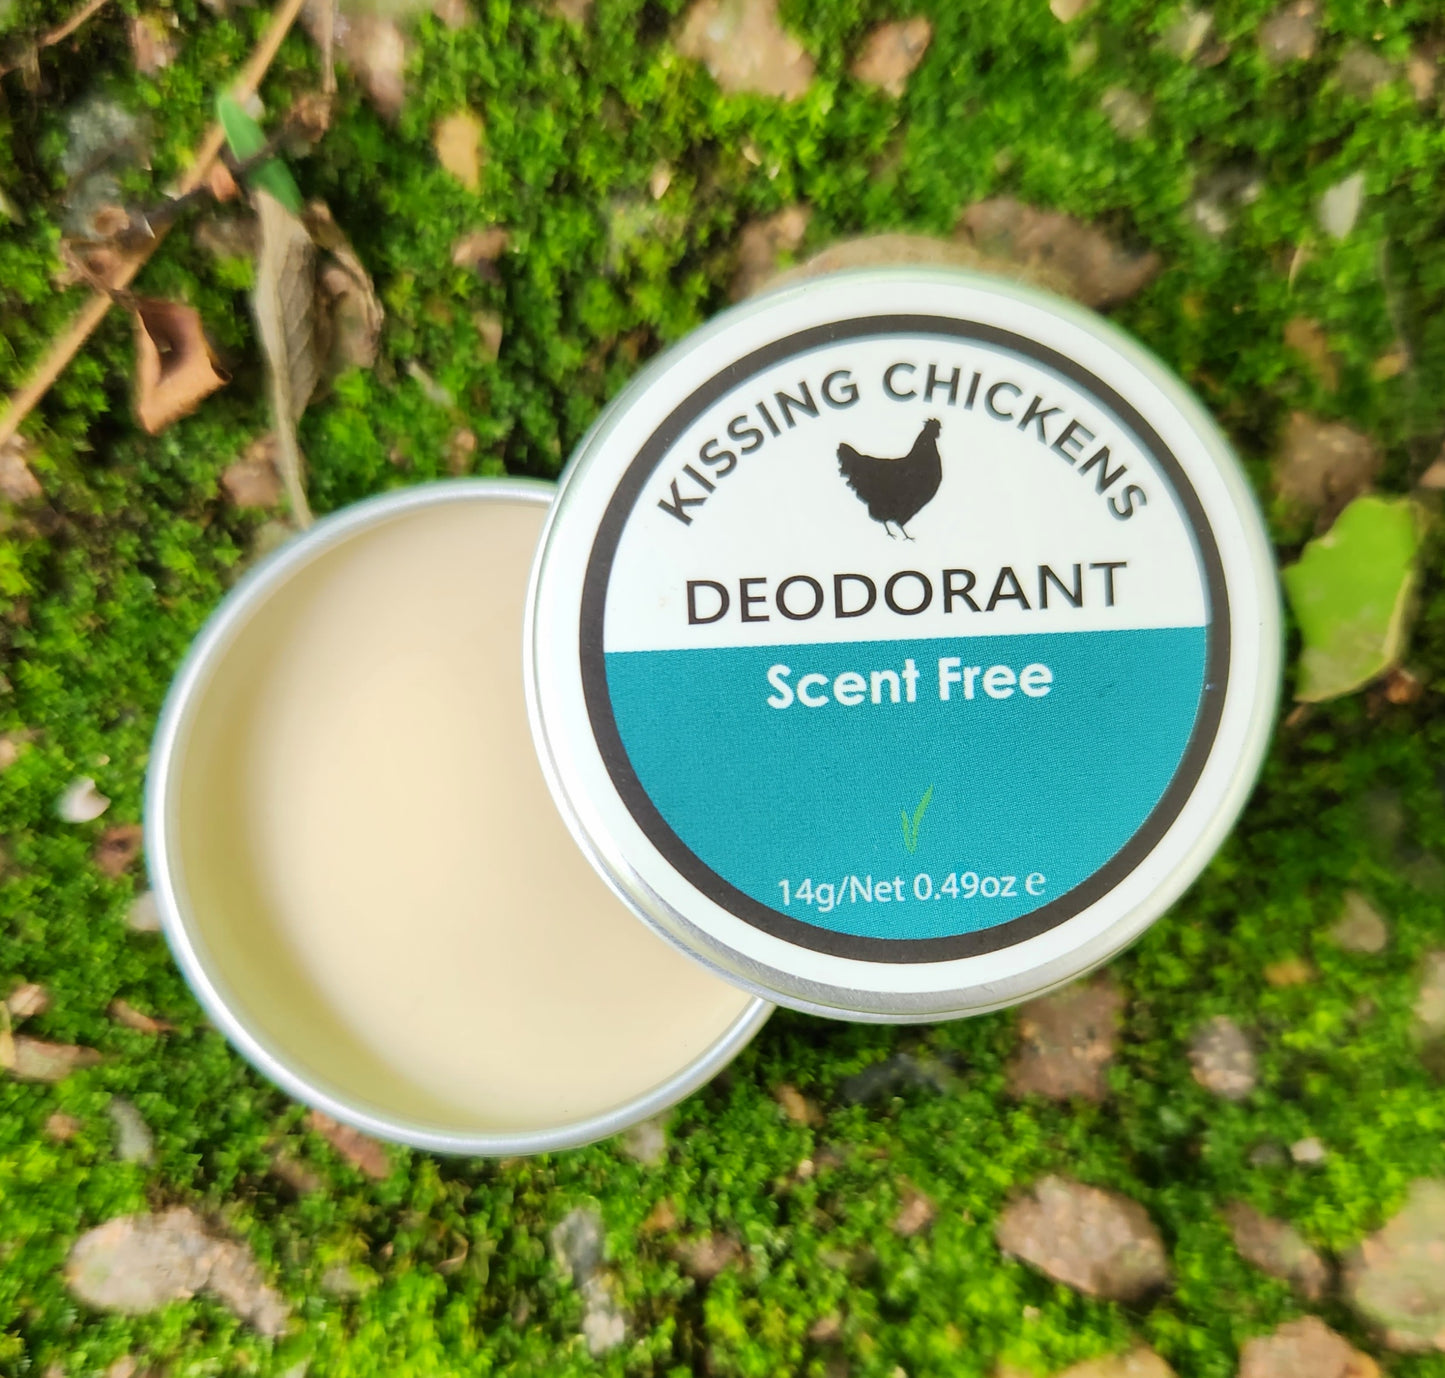 NEW PRODUCT! 14g Mini Tin Natural Deodorant Paste - Scent Free